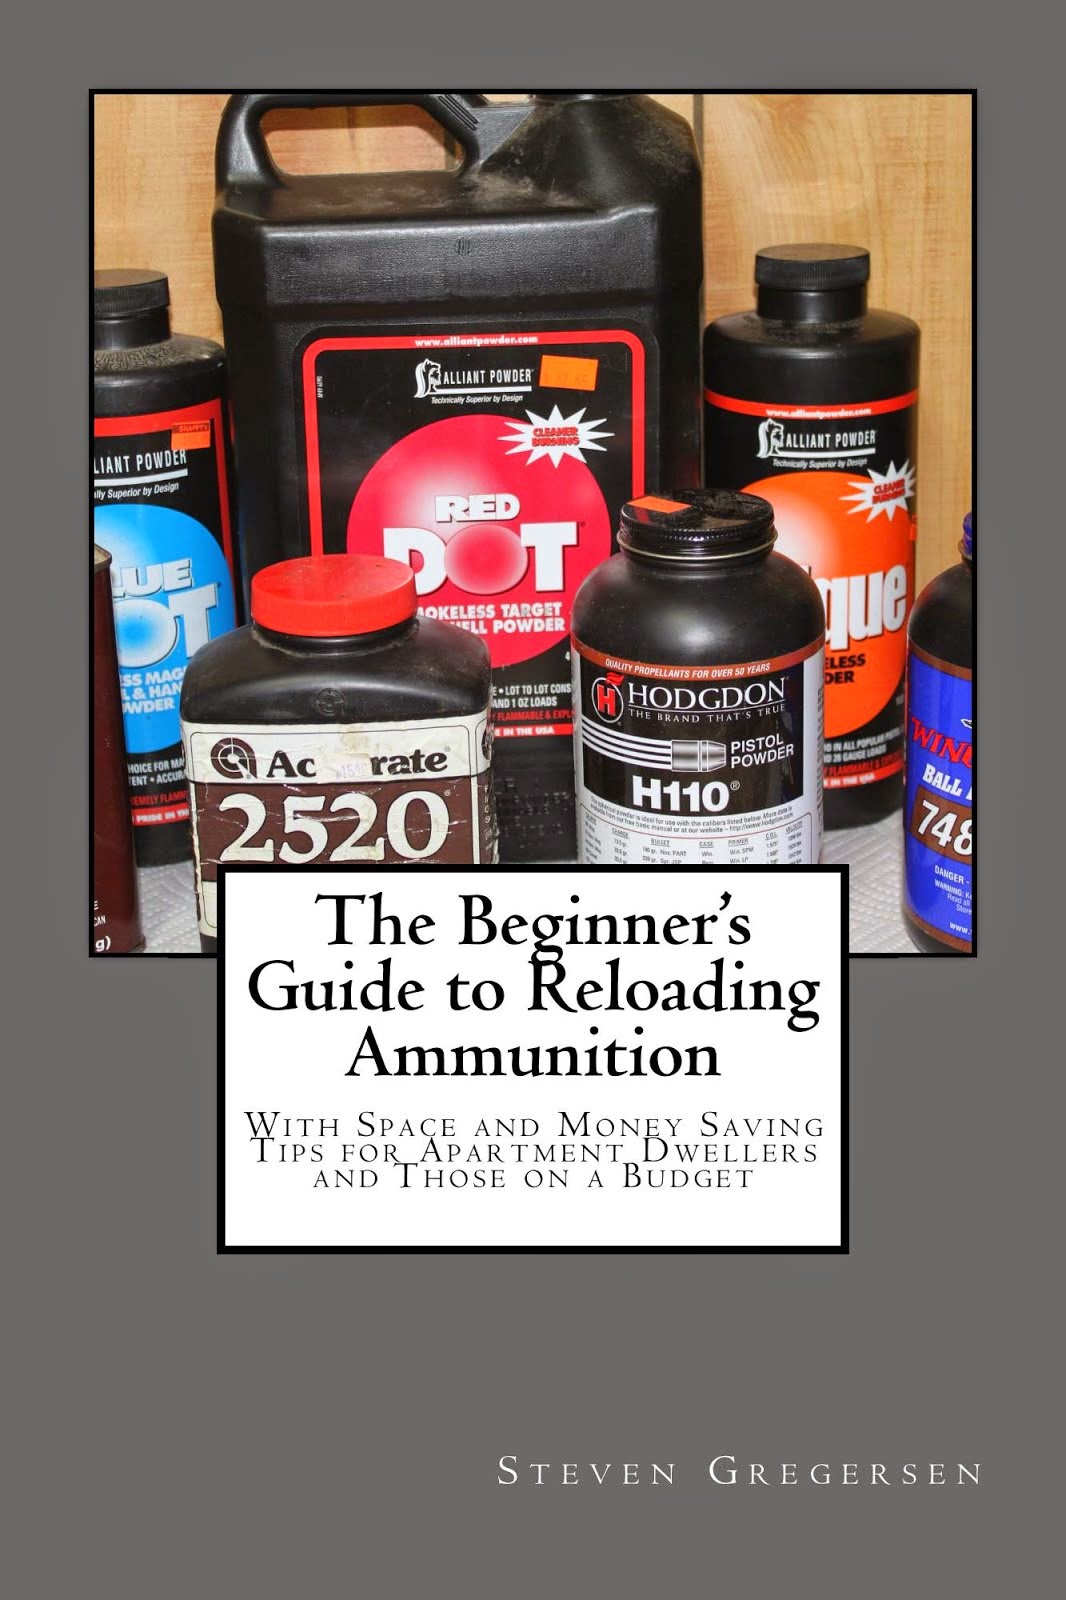 The Beginner's Guide to Reloading Ammunition